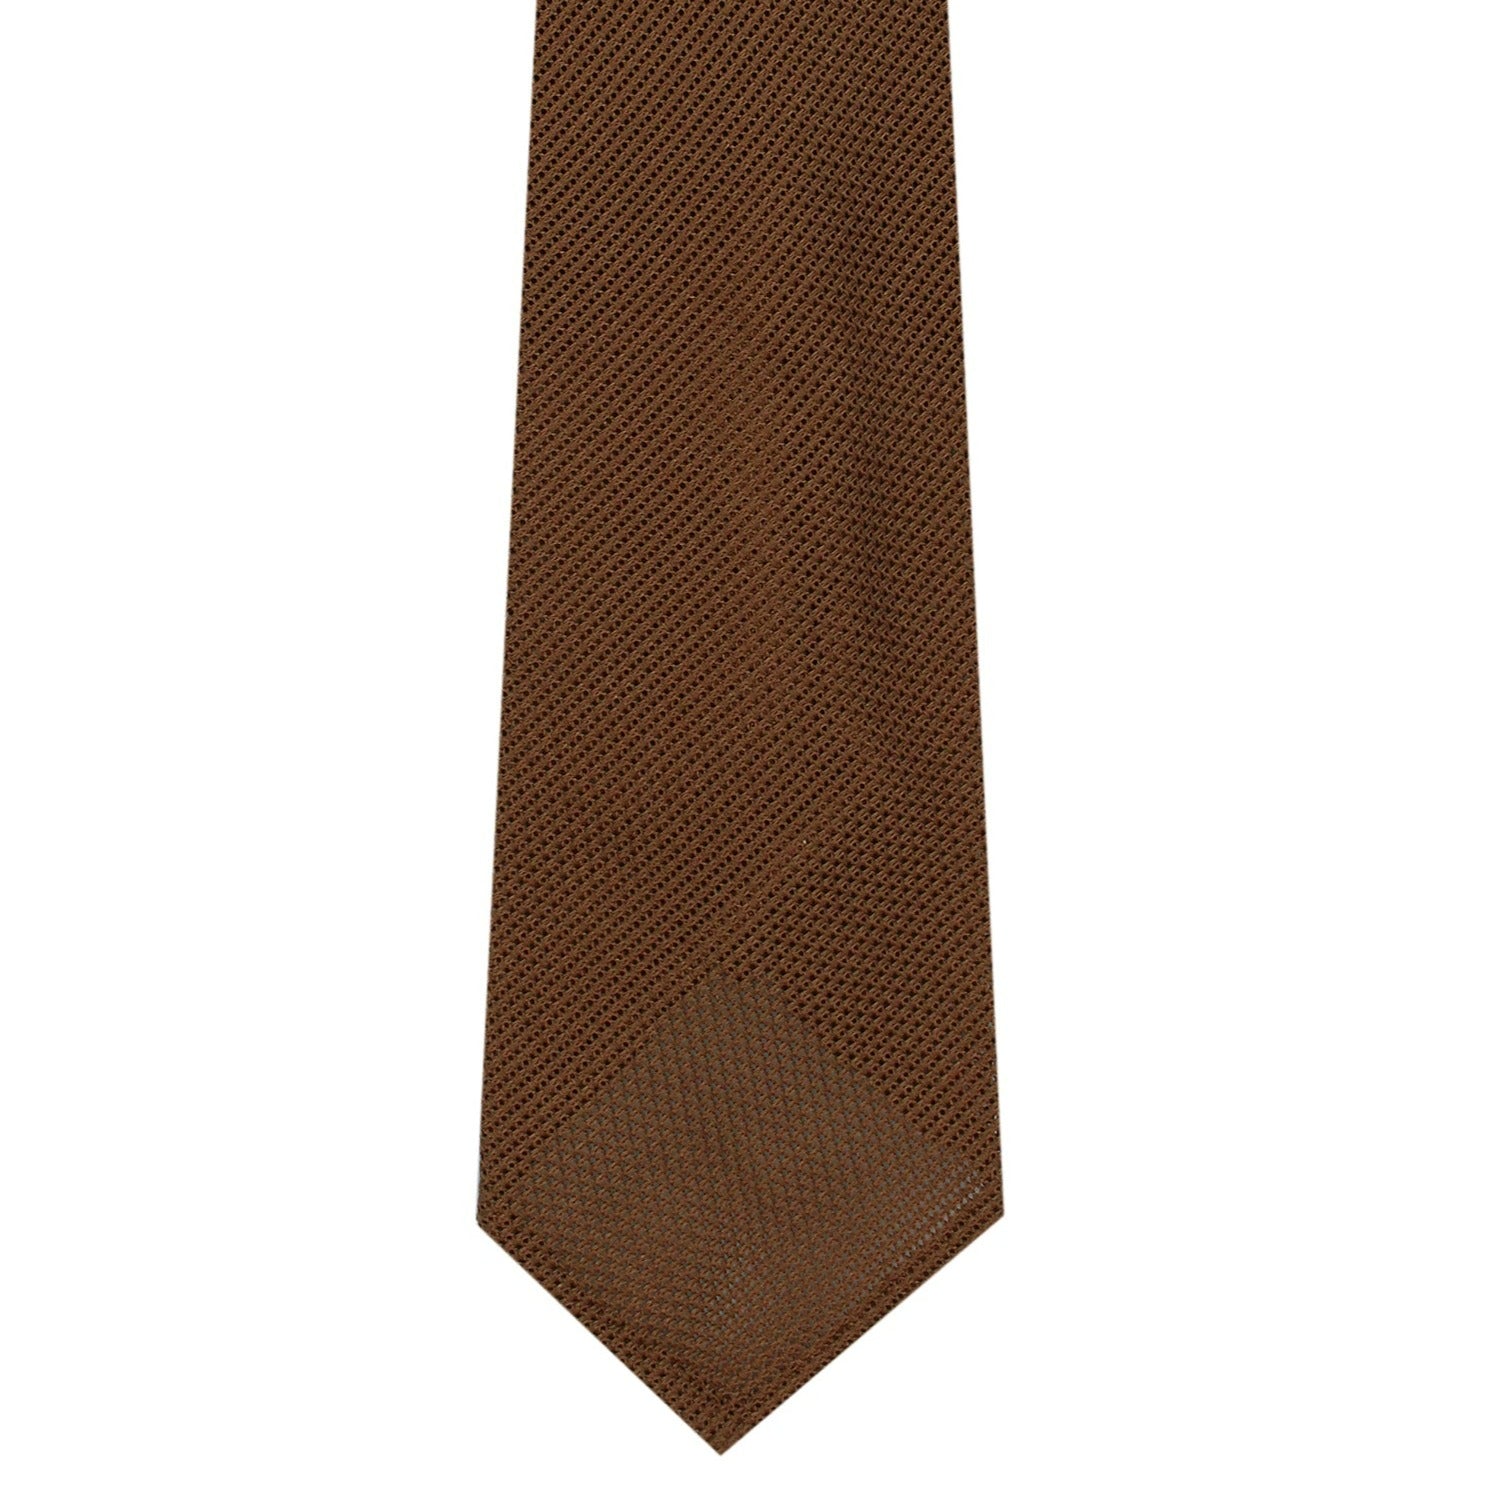 Anversa one-color dark brown silk tie